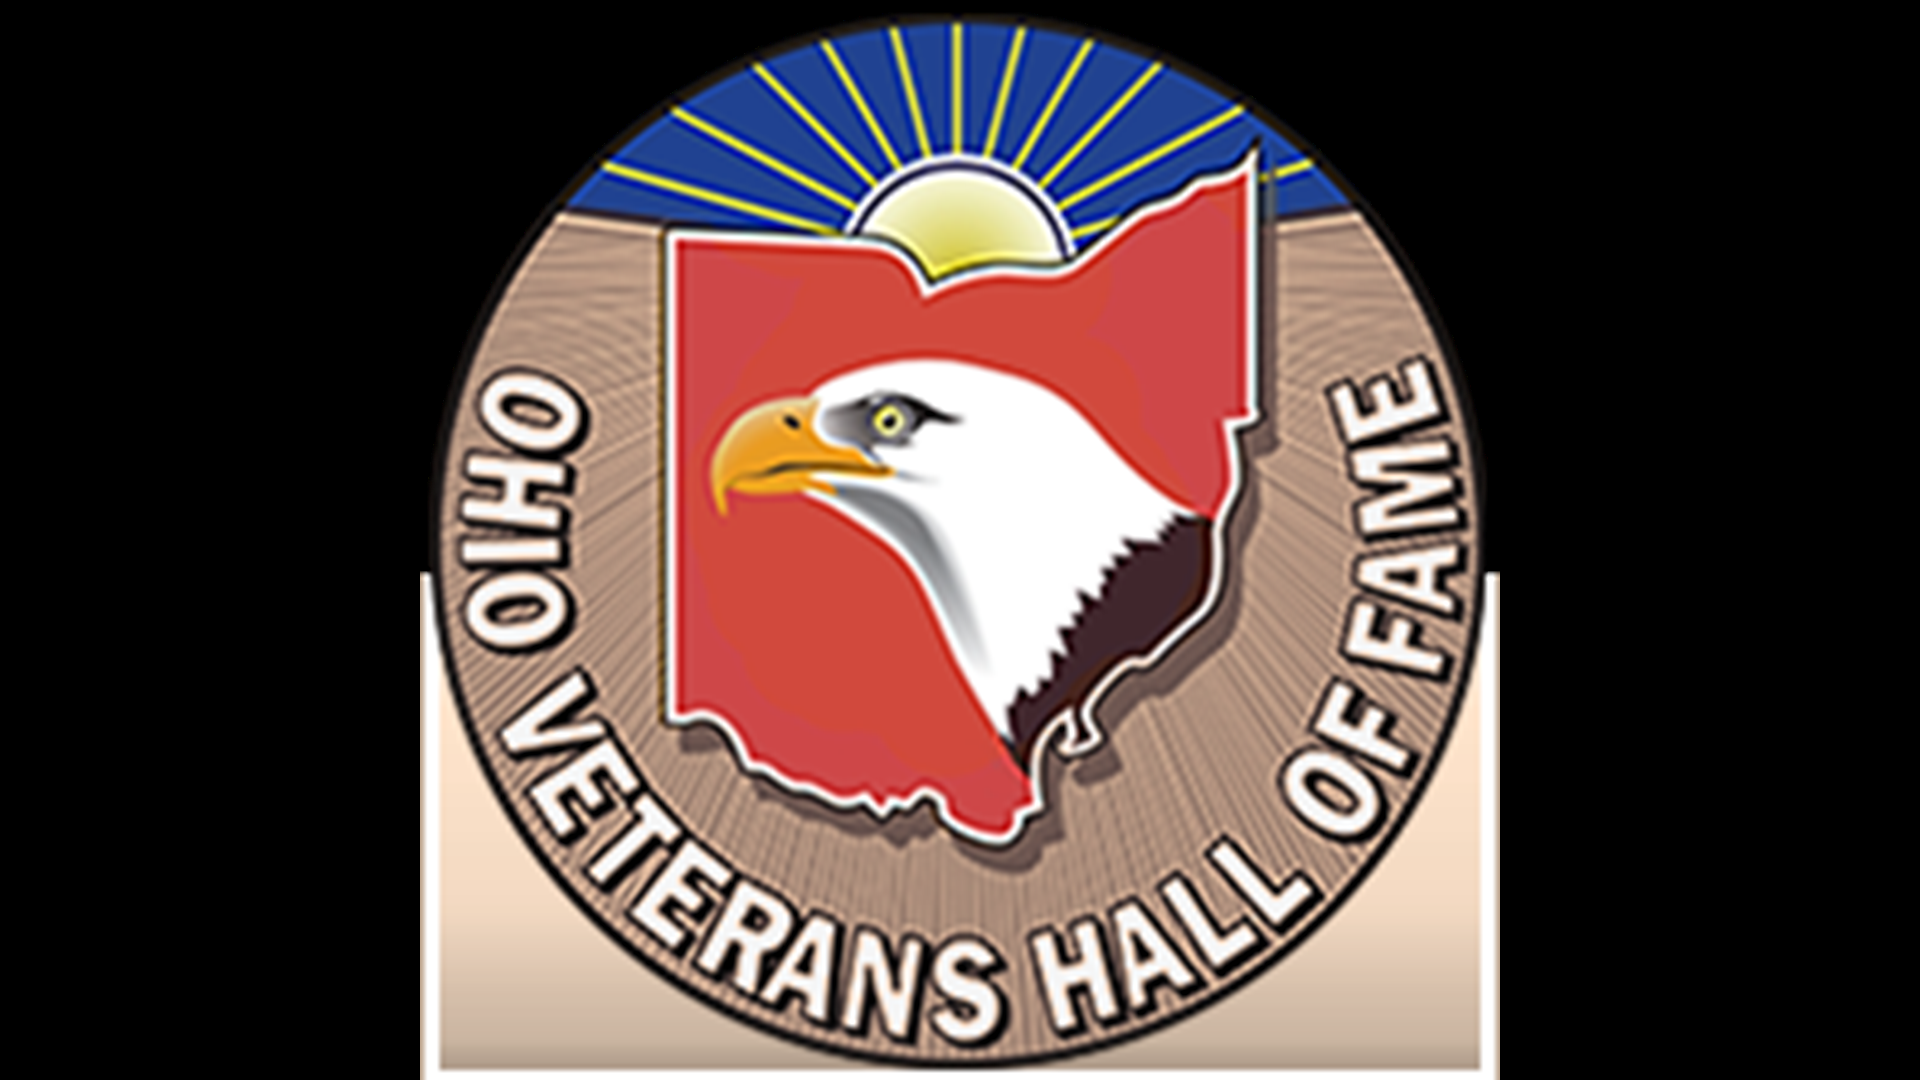 Ohio Veterans Hall of Fame inducting two northwest Ohio veterans